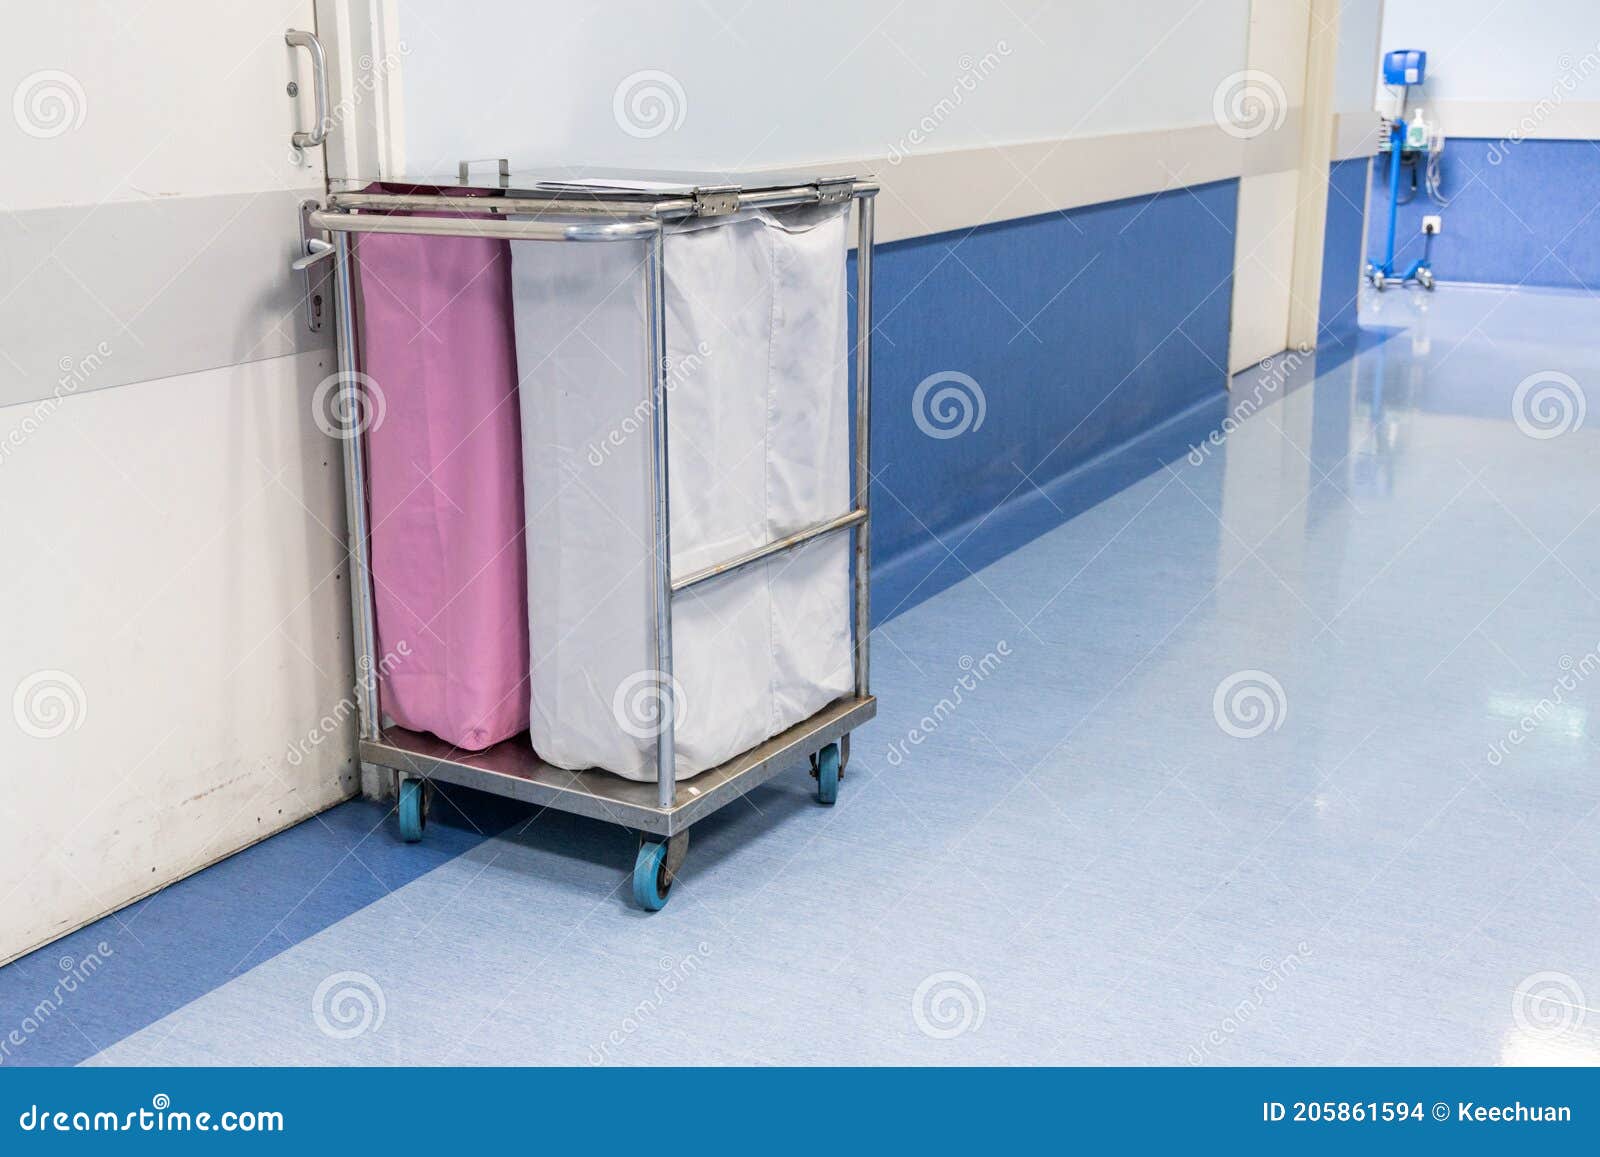 270 Hospital Linen Stock Photos Pictures  RoyaltyFree Images  iStock  Hospital  linen cart Hospital linen closet